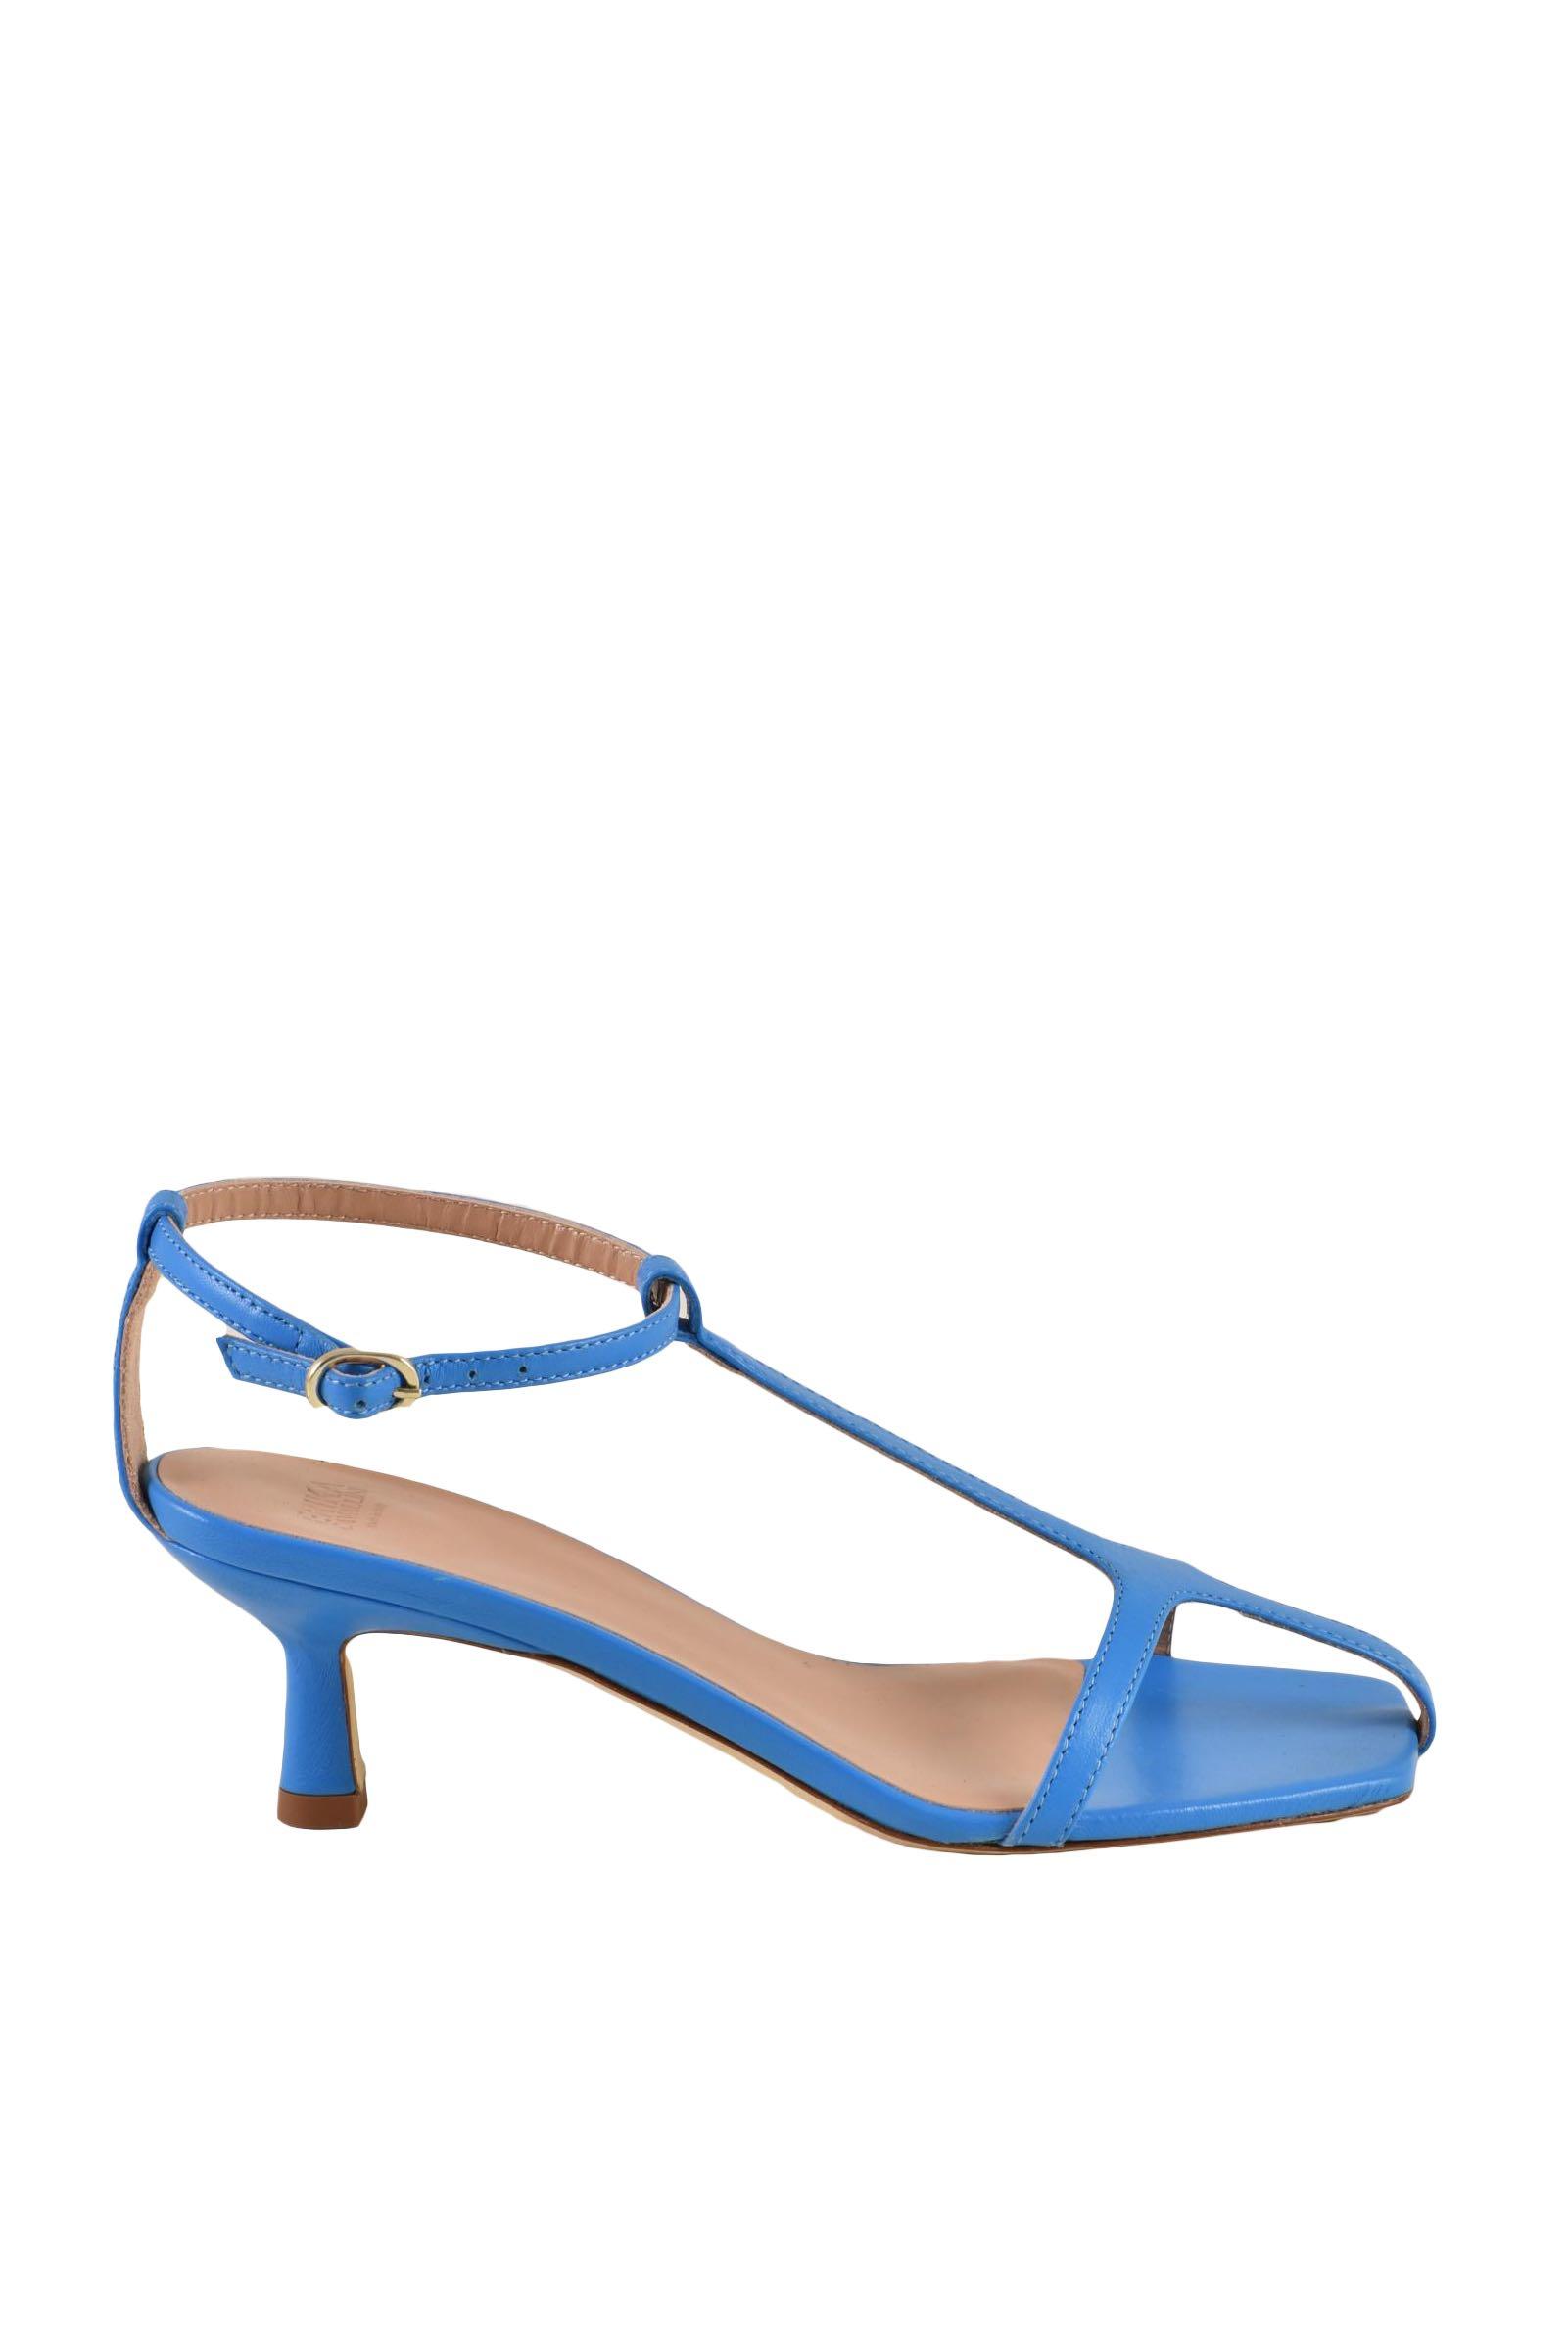 Erika Cavallini Women's Light Blue Sandals